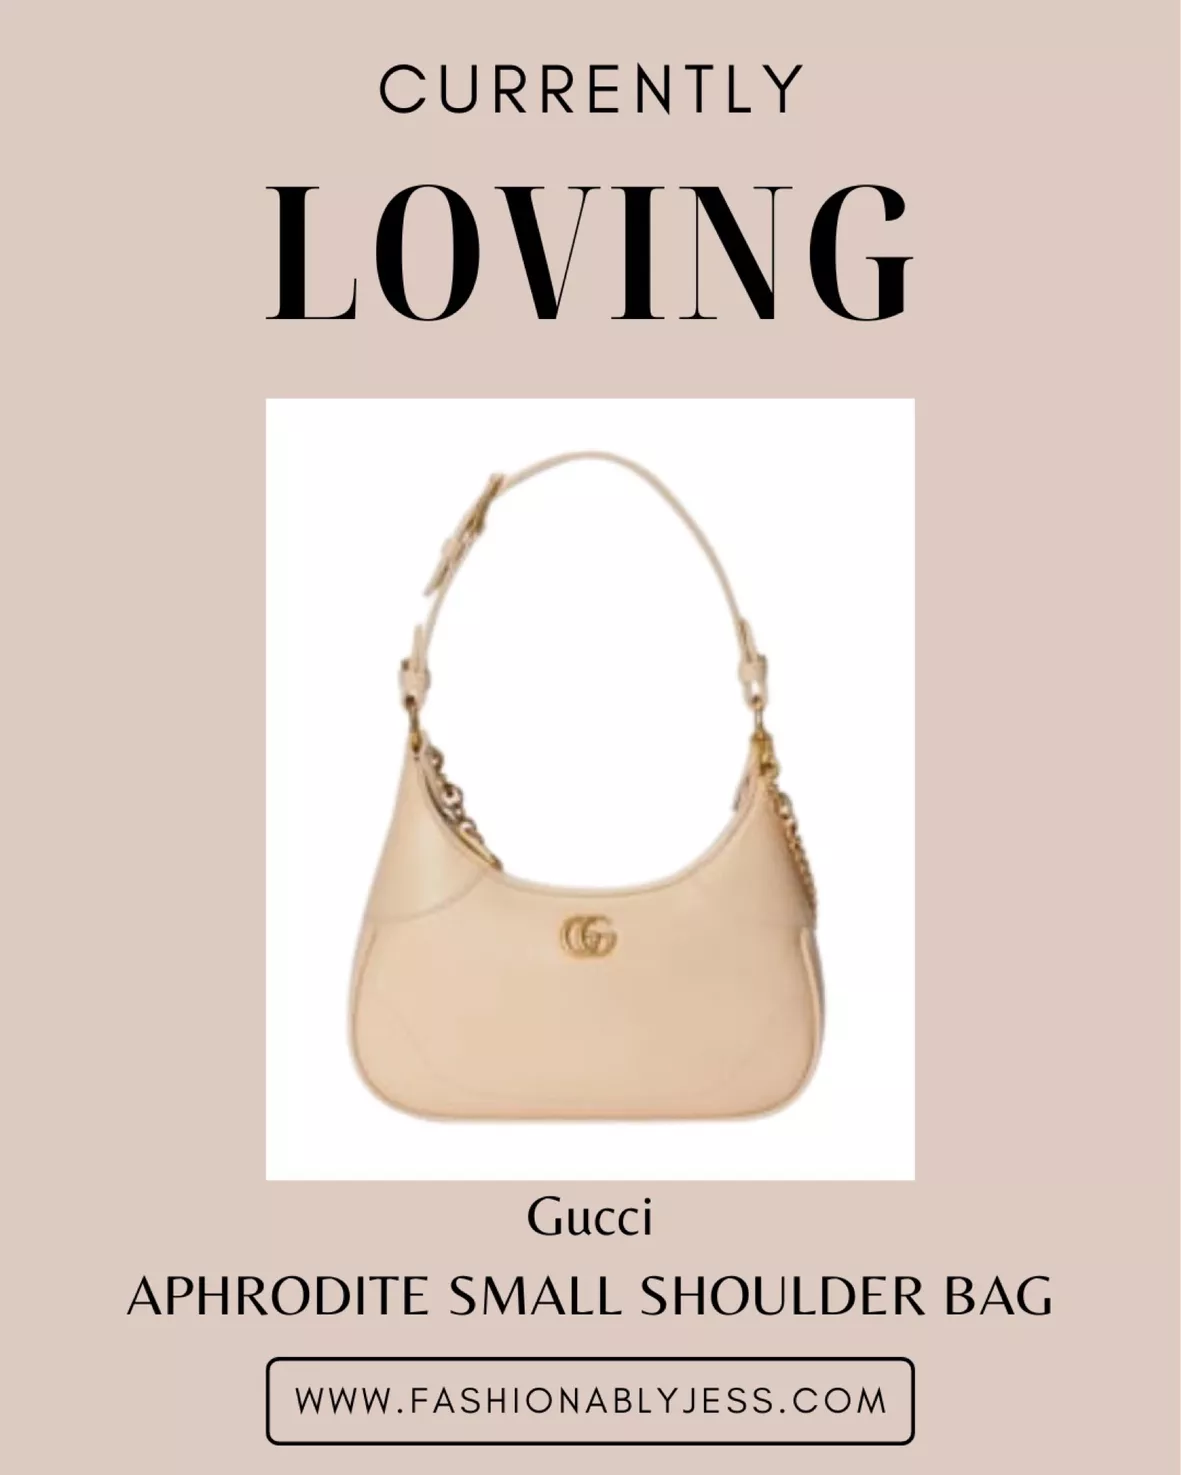 Aphrodite small shoulder bag curated on LTK